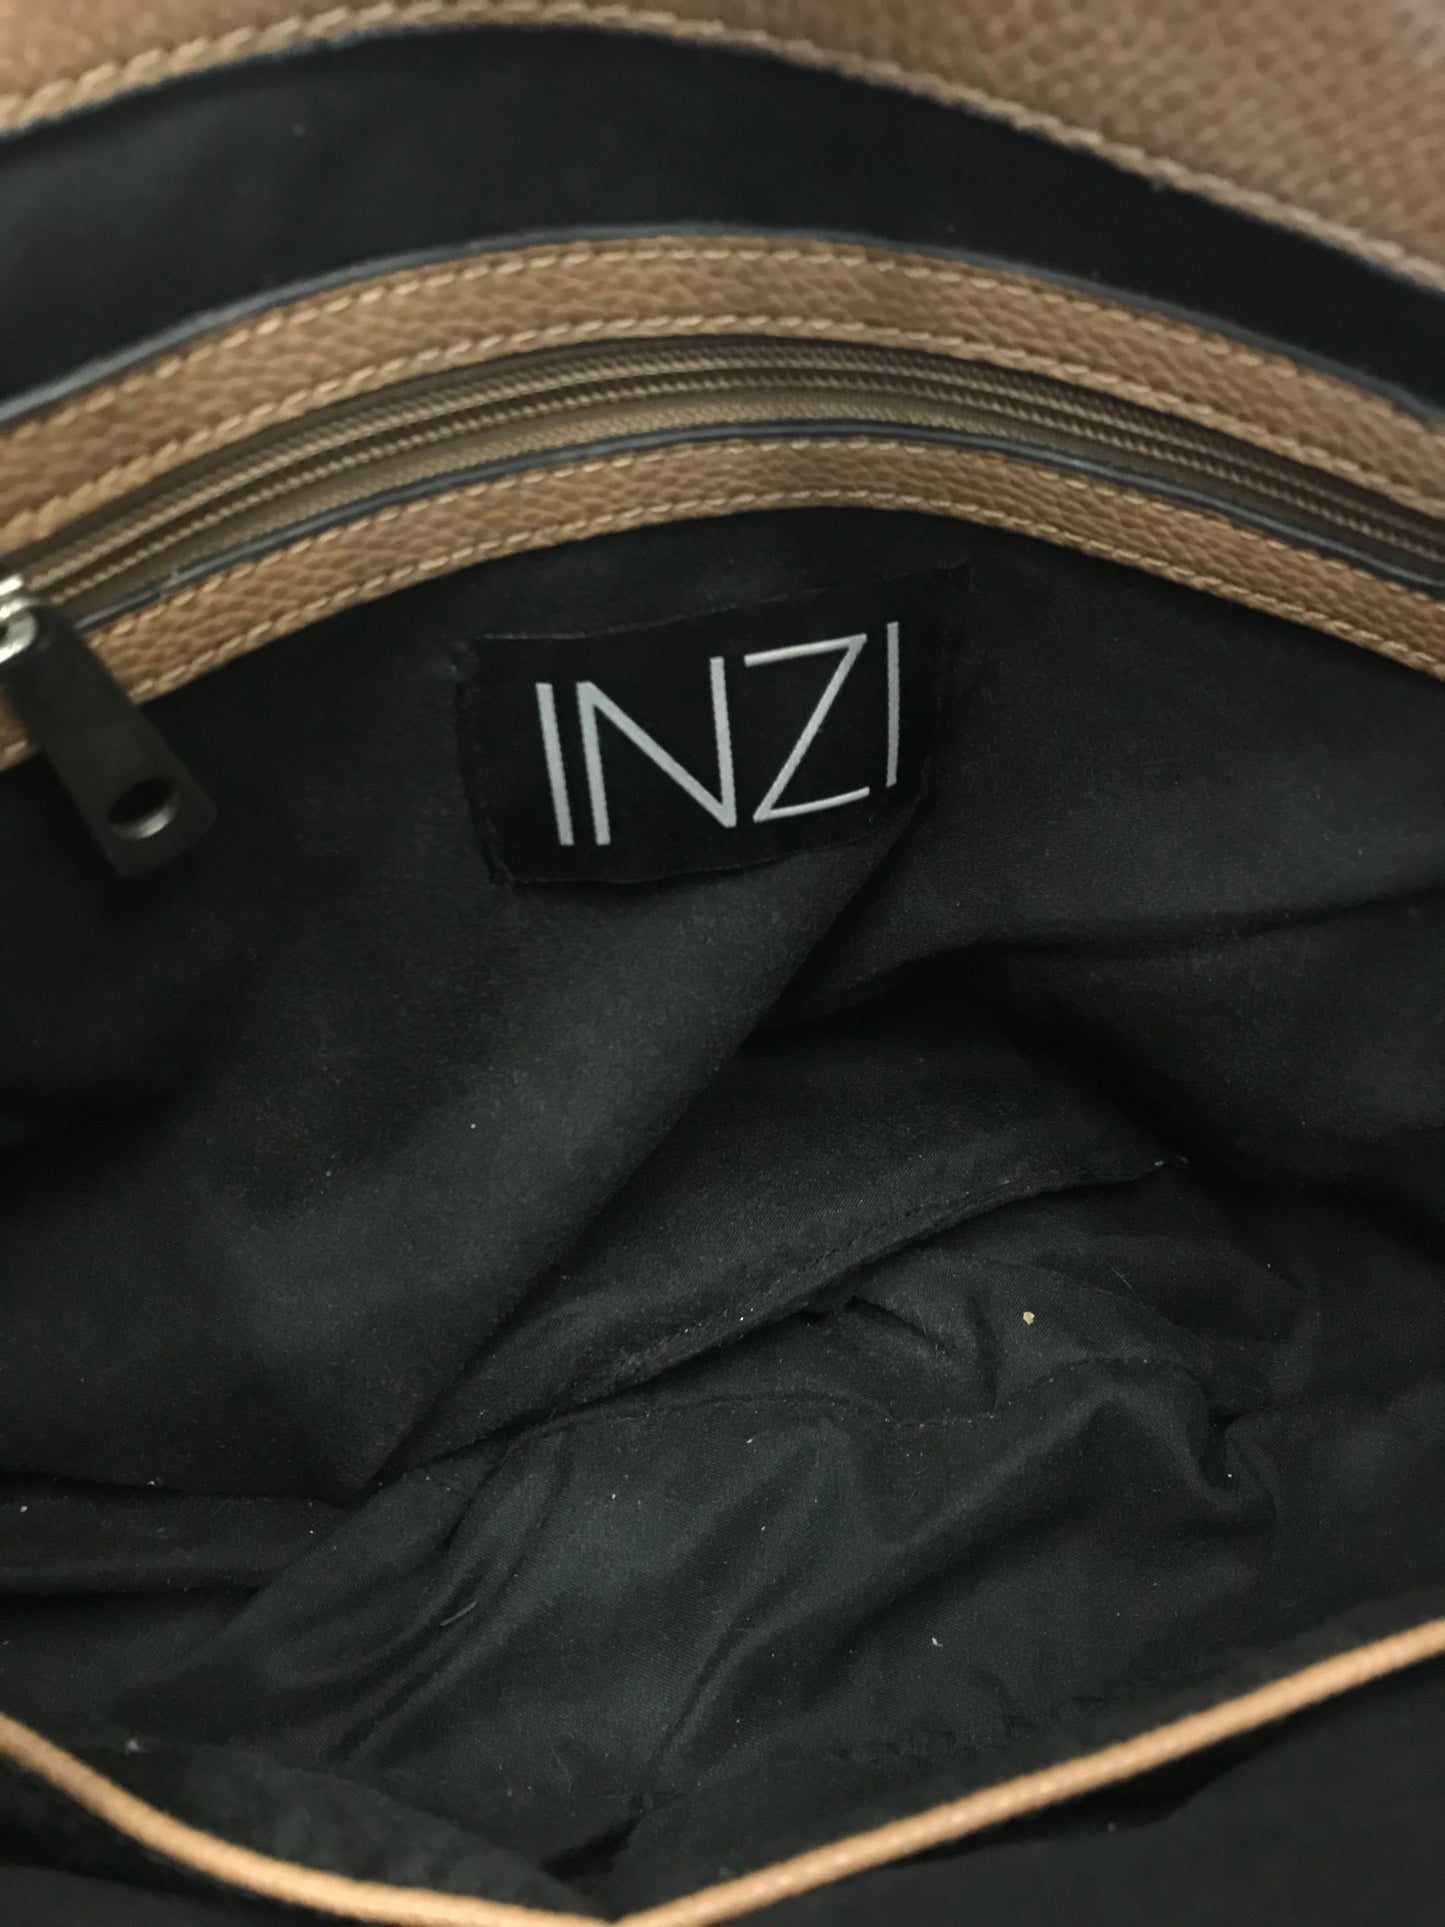 Handbag By Inzi Size: Large